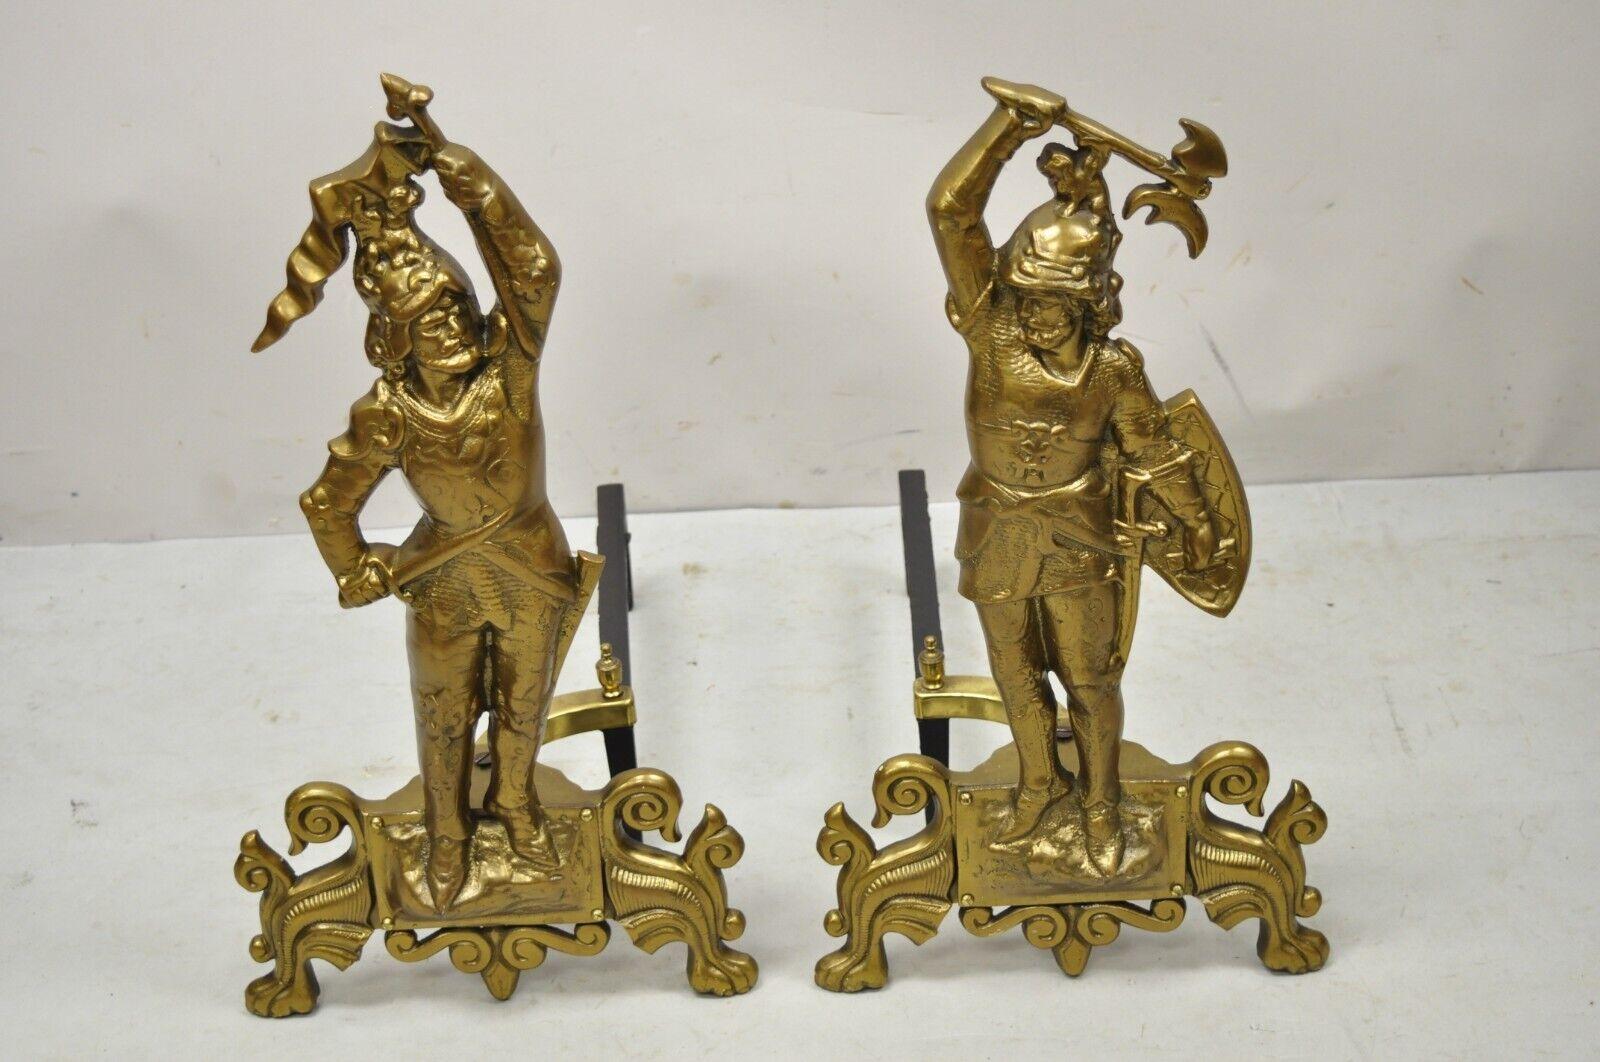 Vtg Cast Brass Figural Renaissance Soldier Warrior Fireplace Andirons - a Pair For Sale 7